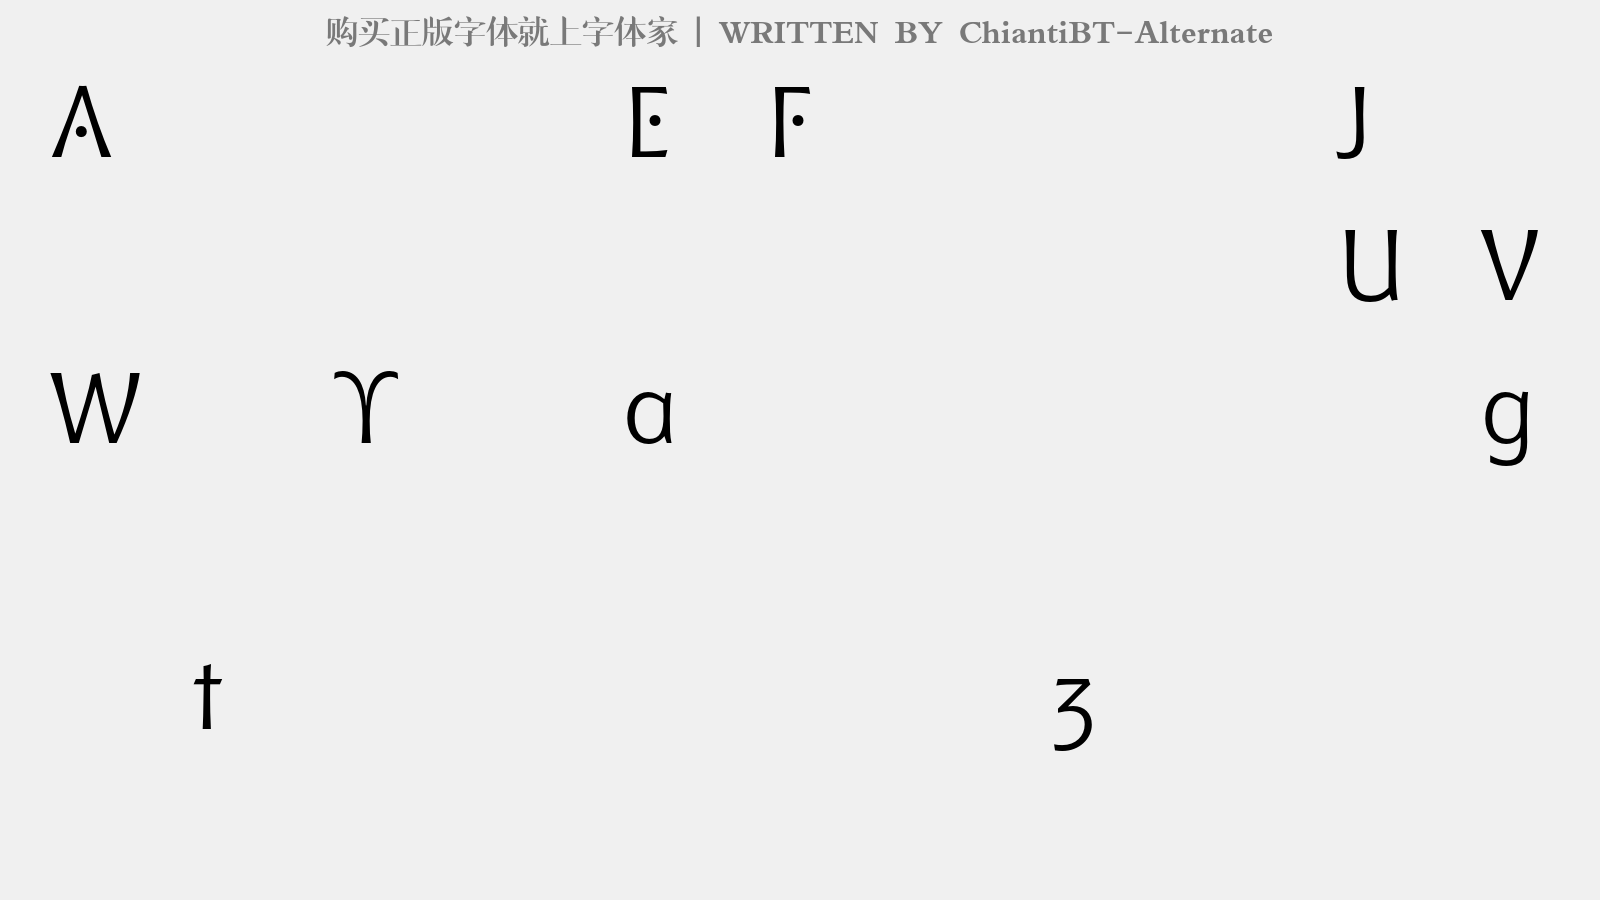 ChiantiBT-Alternate - 大写字母/小写字母/数字